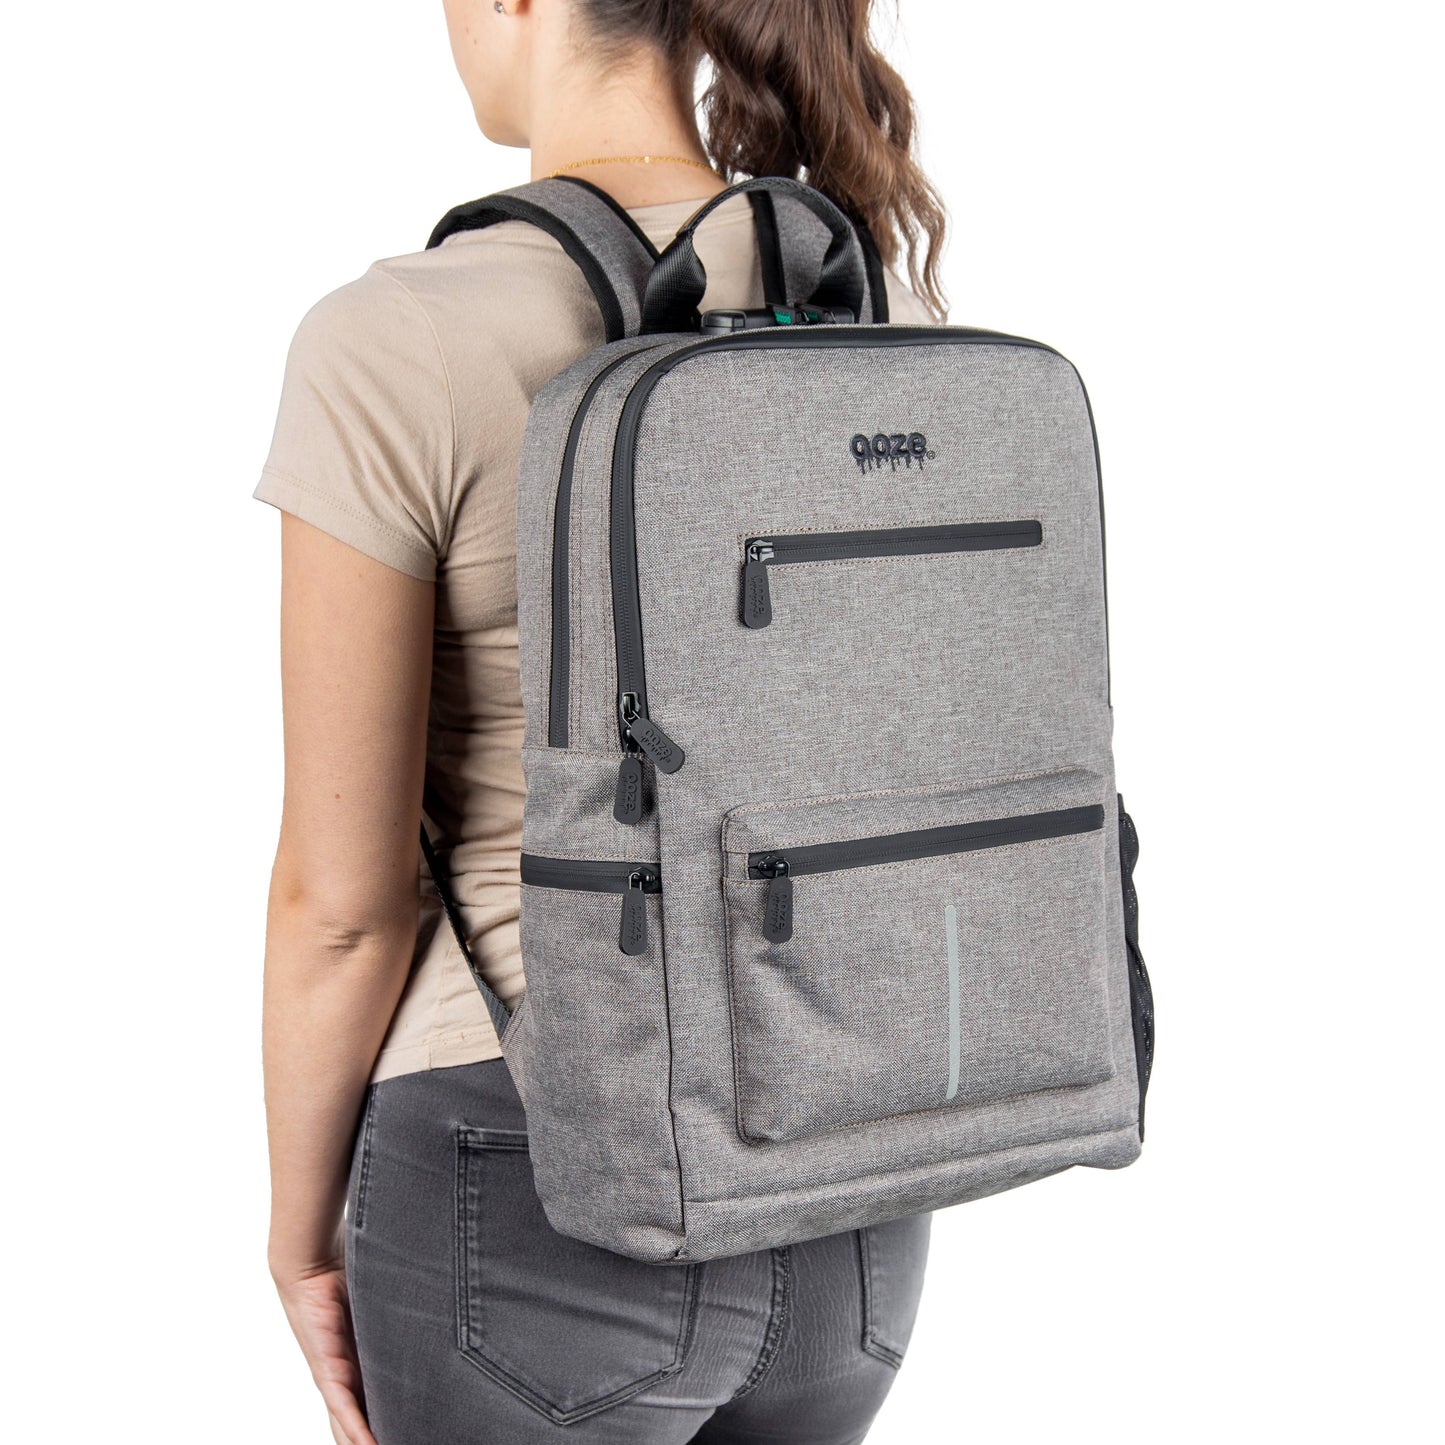 A girl is wearing the smoke gray Ooze backpack